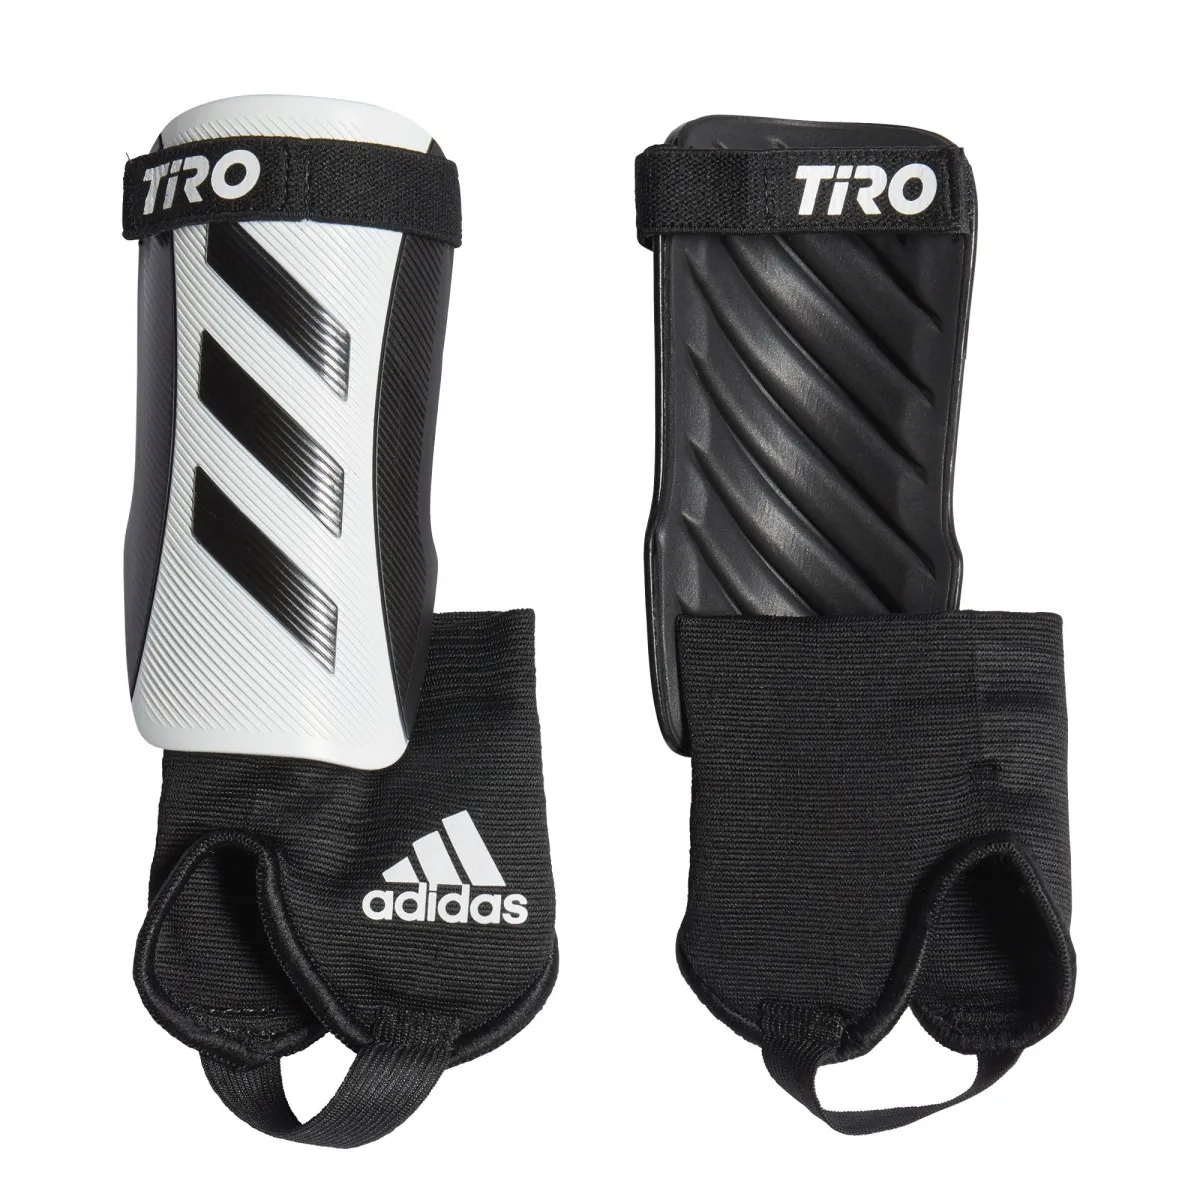 adidas skinnebensbeskyttere Tiro Match senior